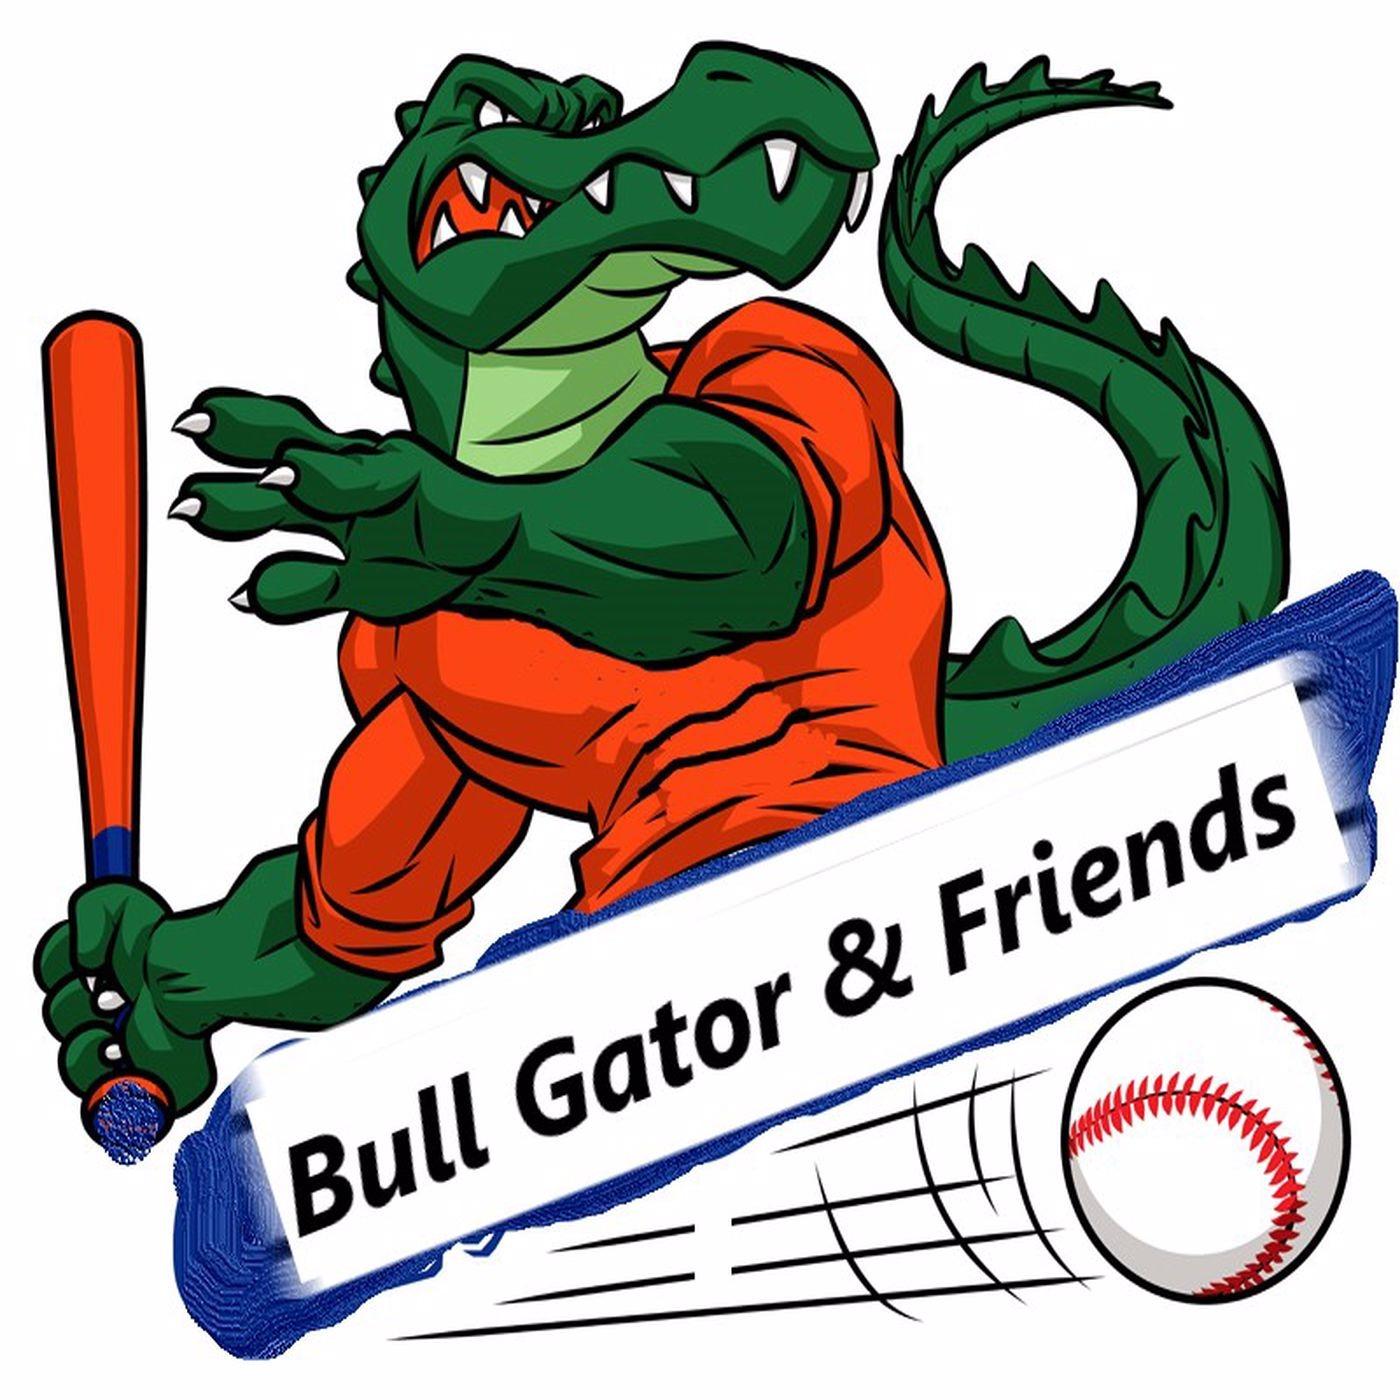 Bull Gator and Friends